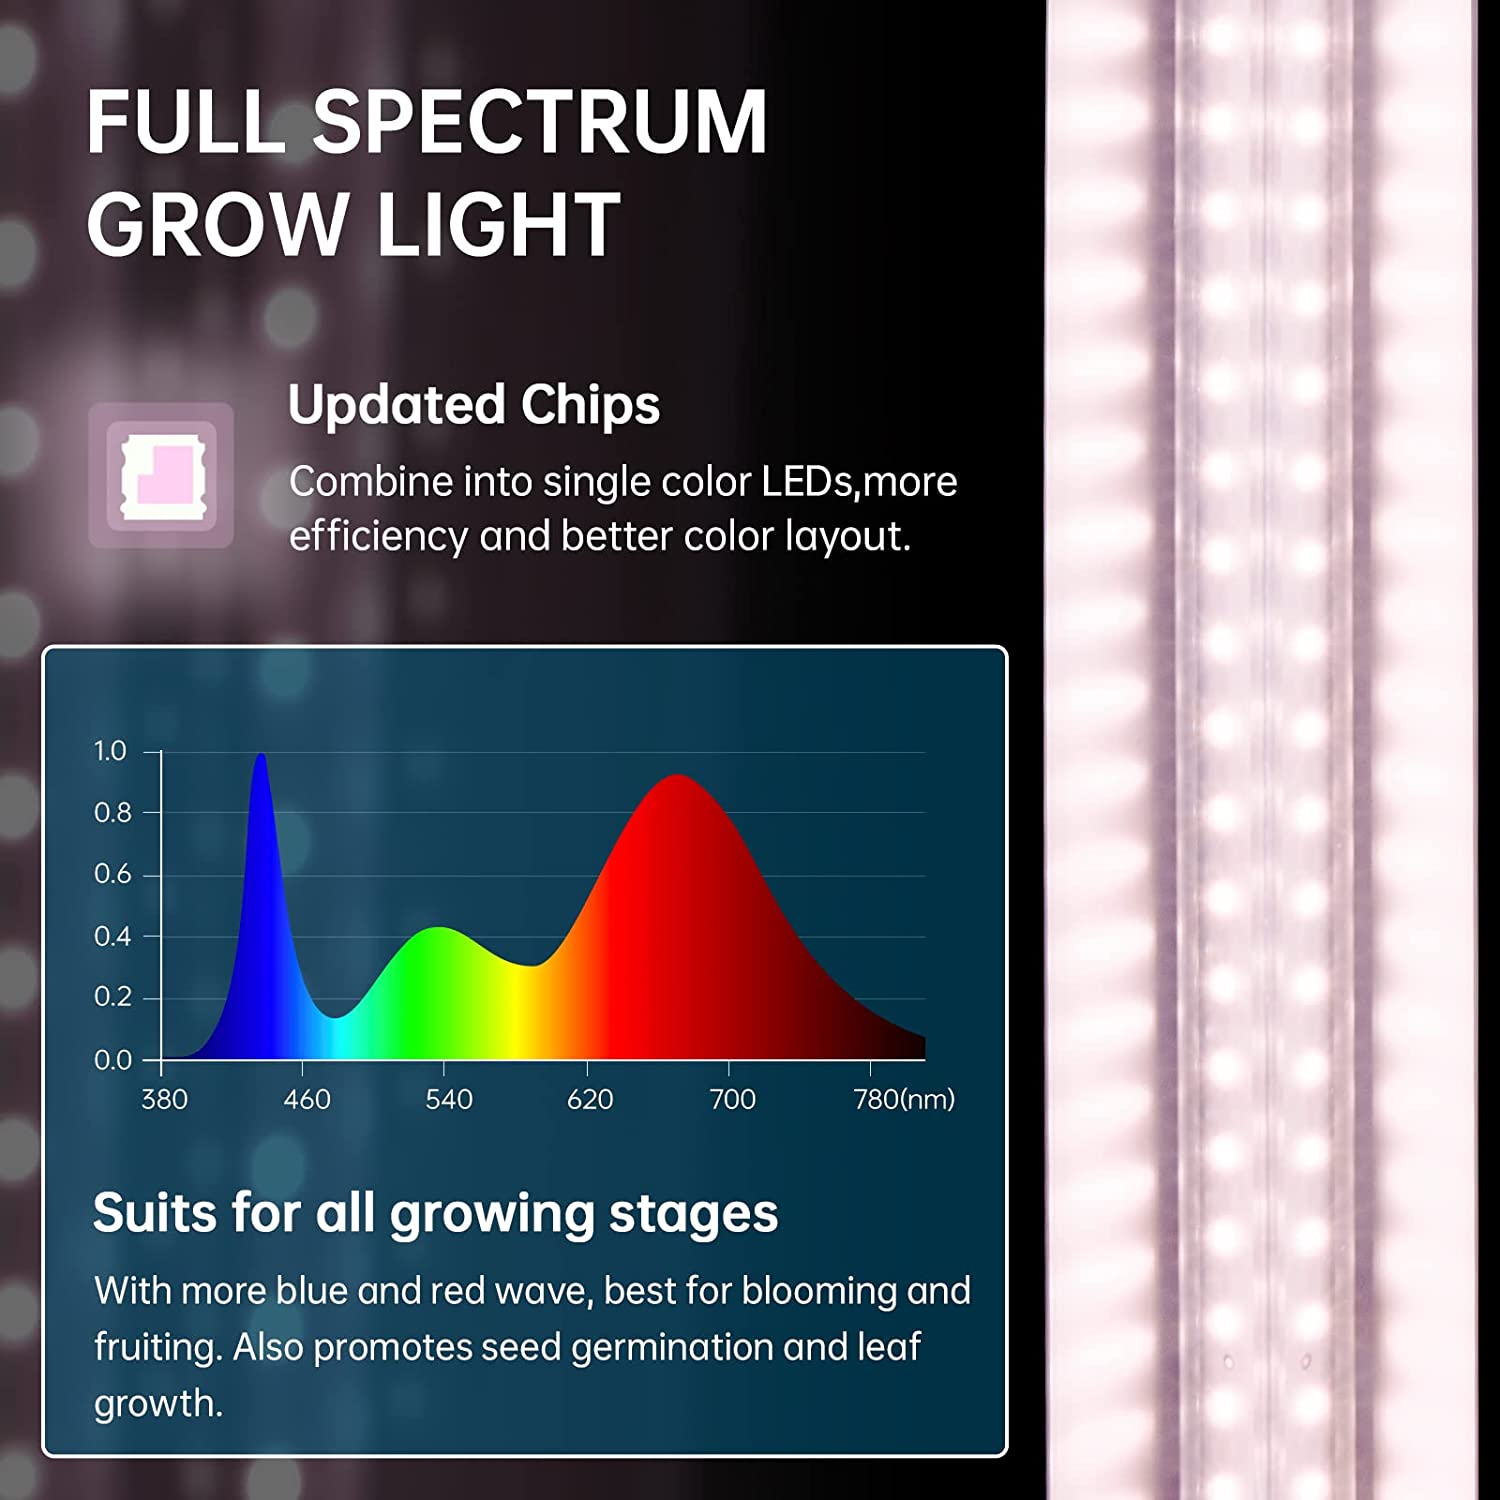 T8 LED Grow Light,2FT,24W,Pinkish White,Full Spectrum,Linkable,Reflector Design,4 Packs,QF24(FB) - Barrina led